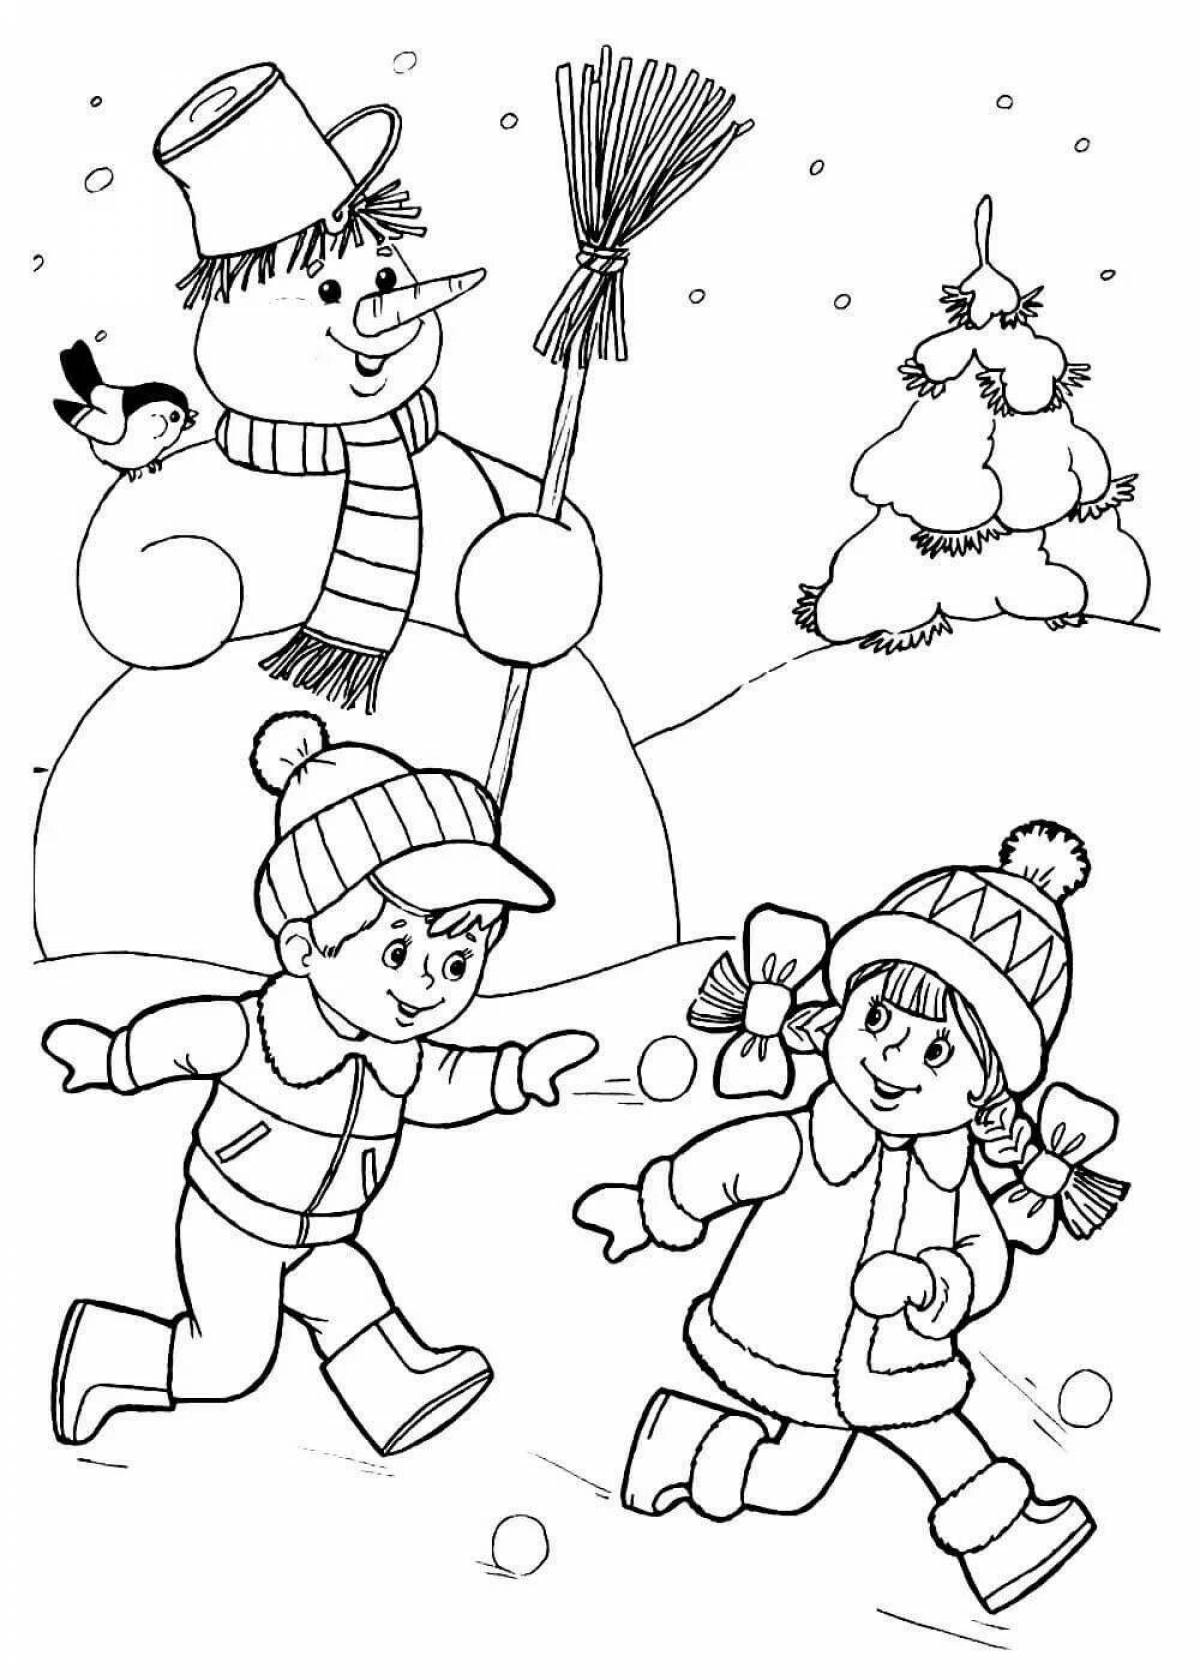 Luminous winter fun coloring book